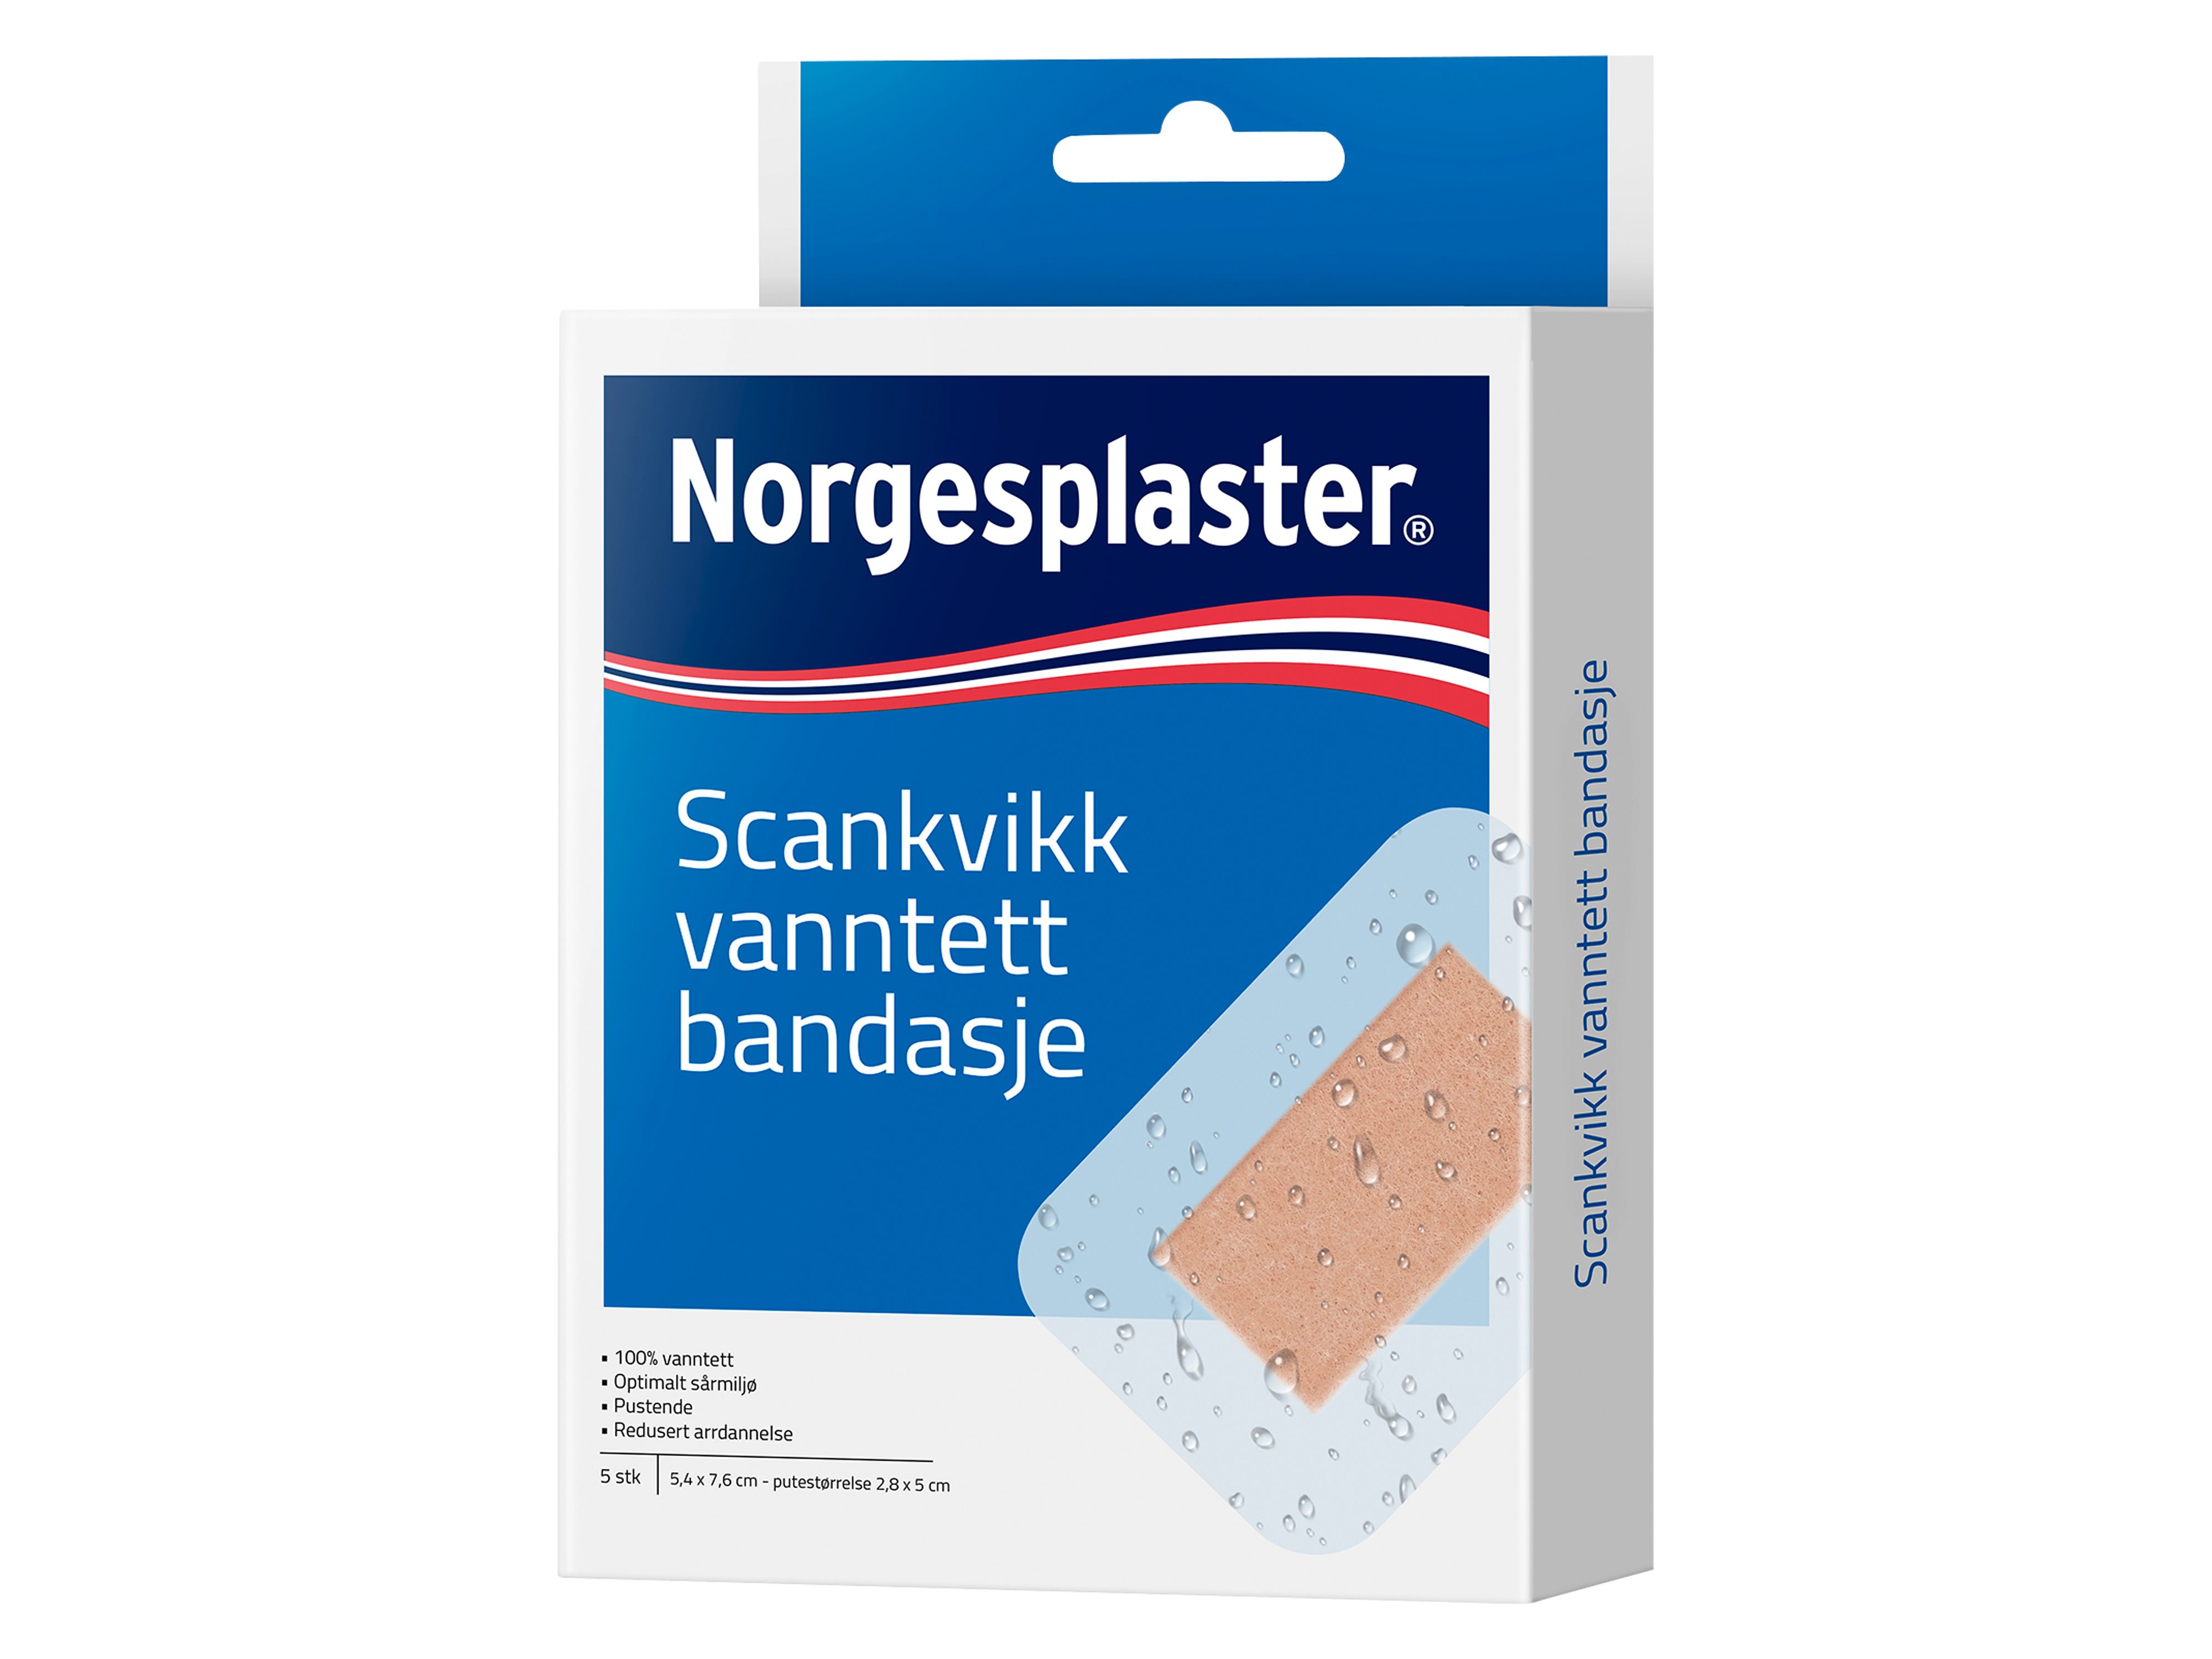 Norgesplaster Scankvikk vanntett bandasje, 5,4x7,6 cm, 5 stk.